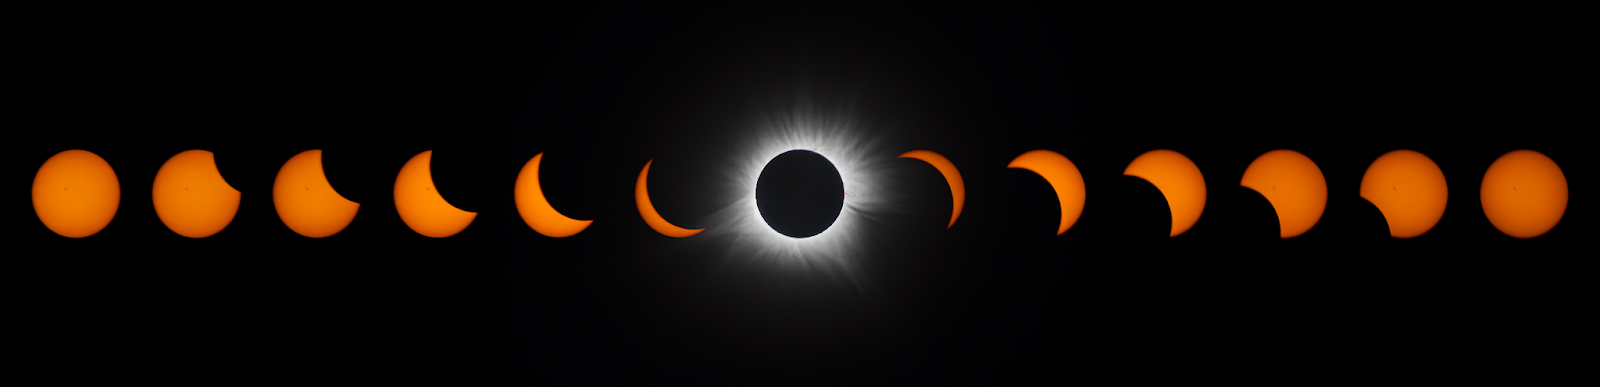 stitched photo of eclipse progression